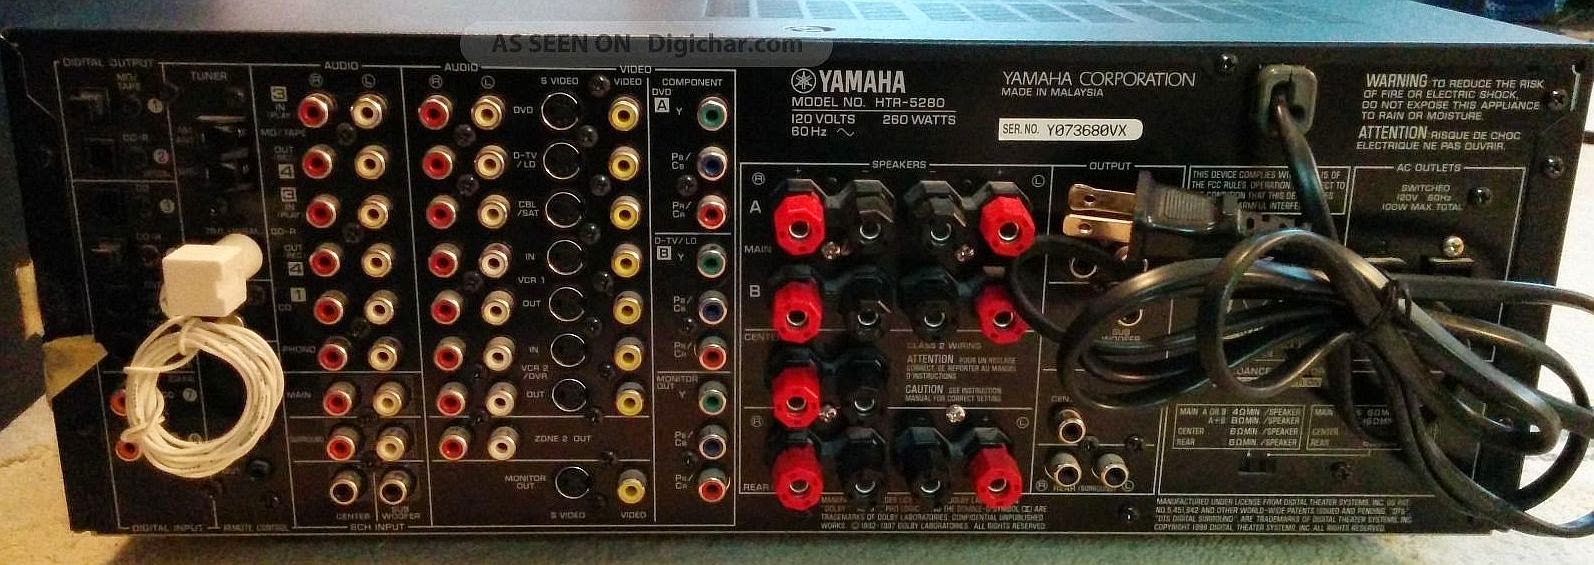 Yamaha HTR-5280 - AV Receiver | AudioBaza